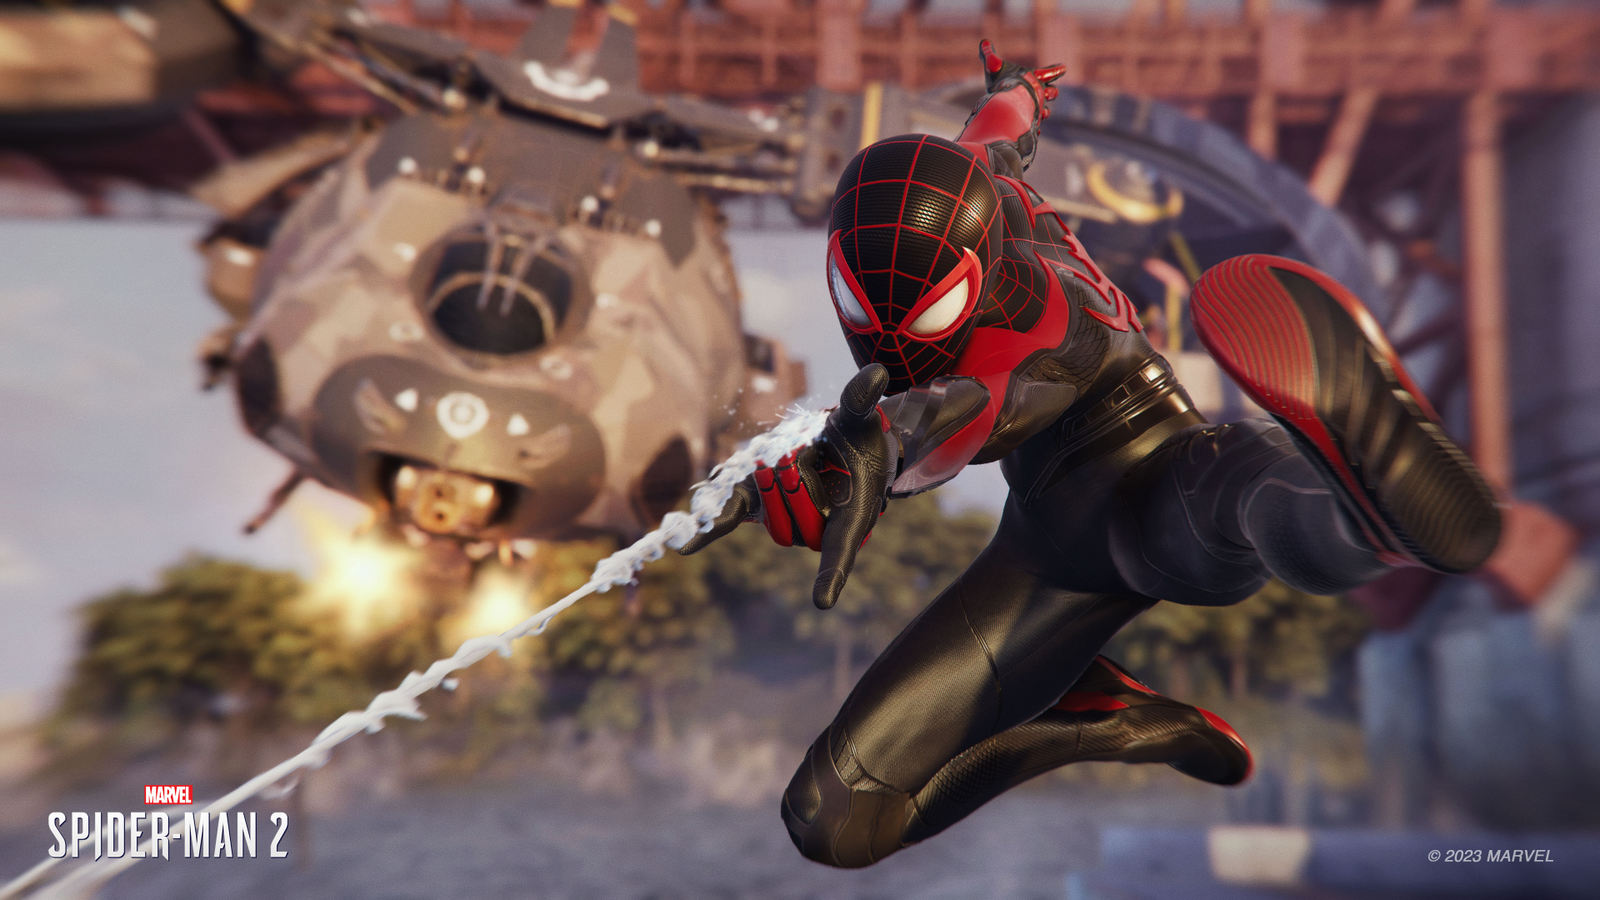 Spider-Man 2 developer discusses balancing sequel's darker tone - Eurogamer.net (Picture 3)